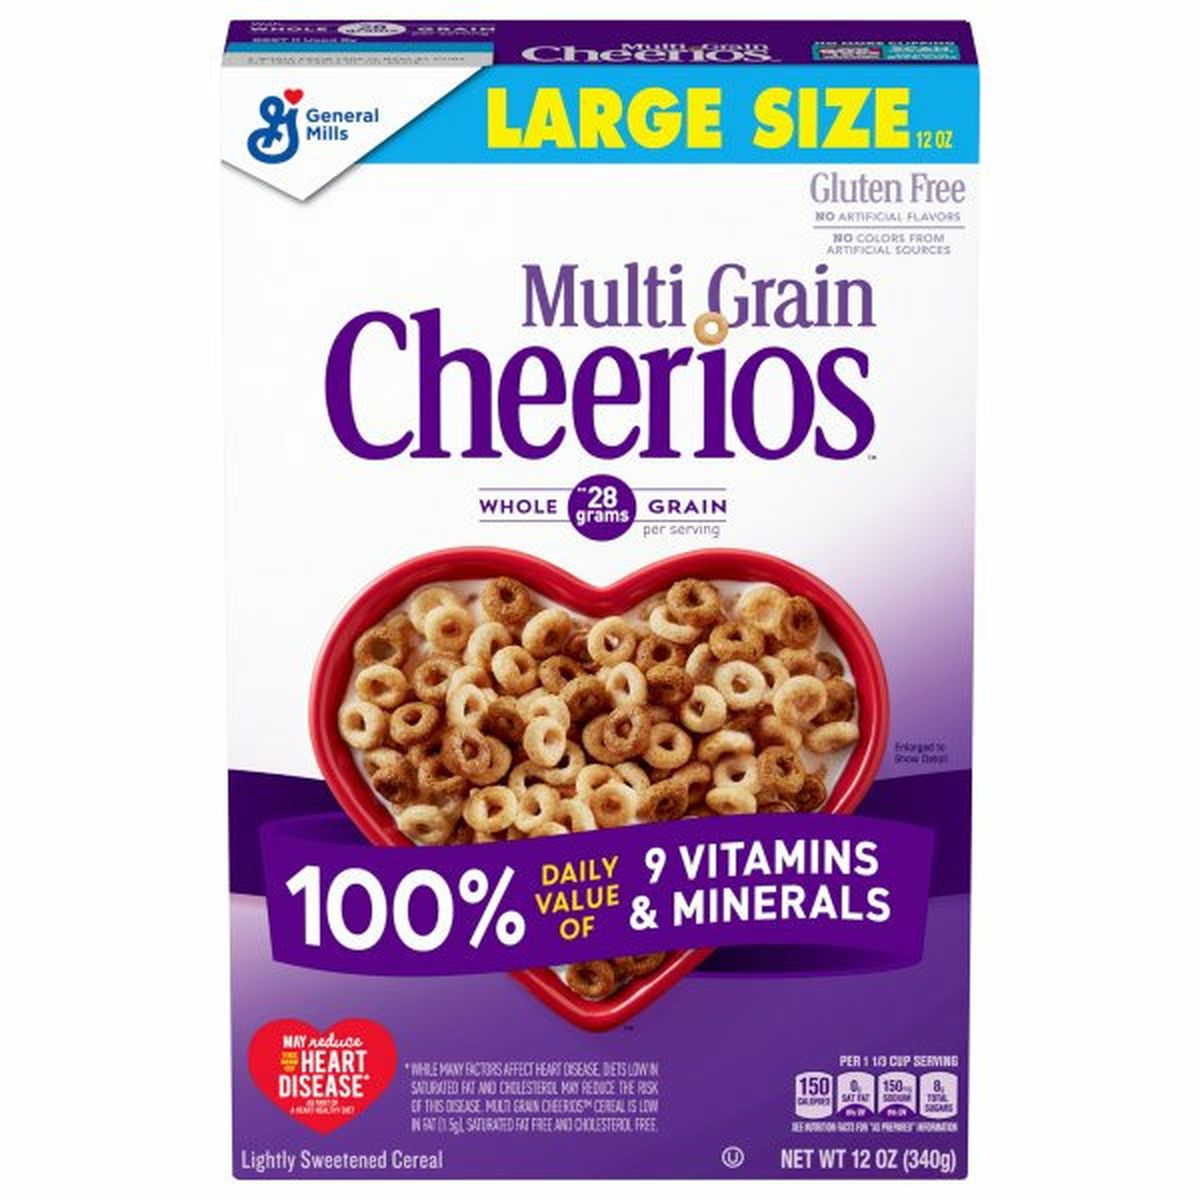 Calories in Multigrain Cheerios Cereal, Multi Grain, Large Size